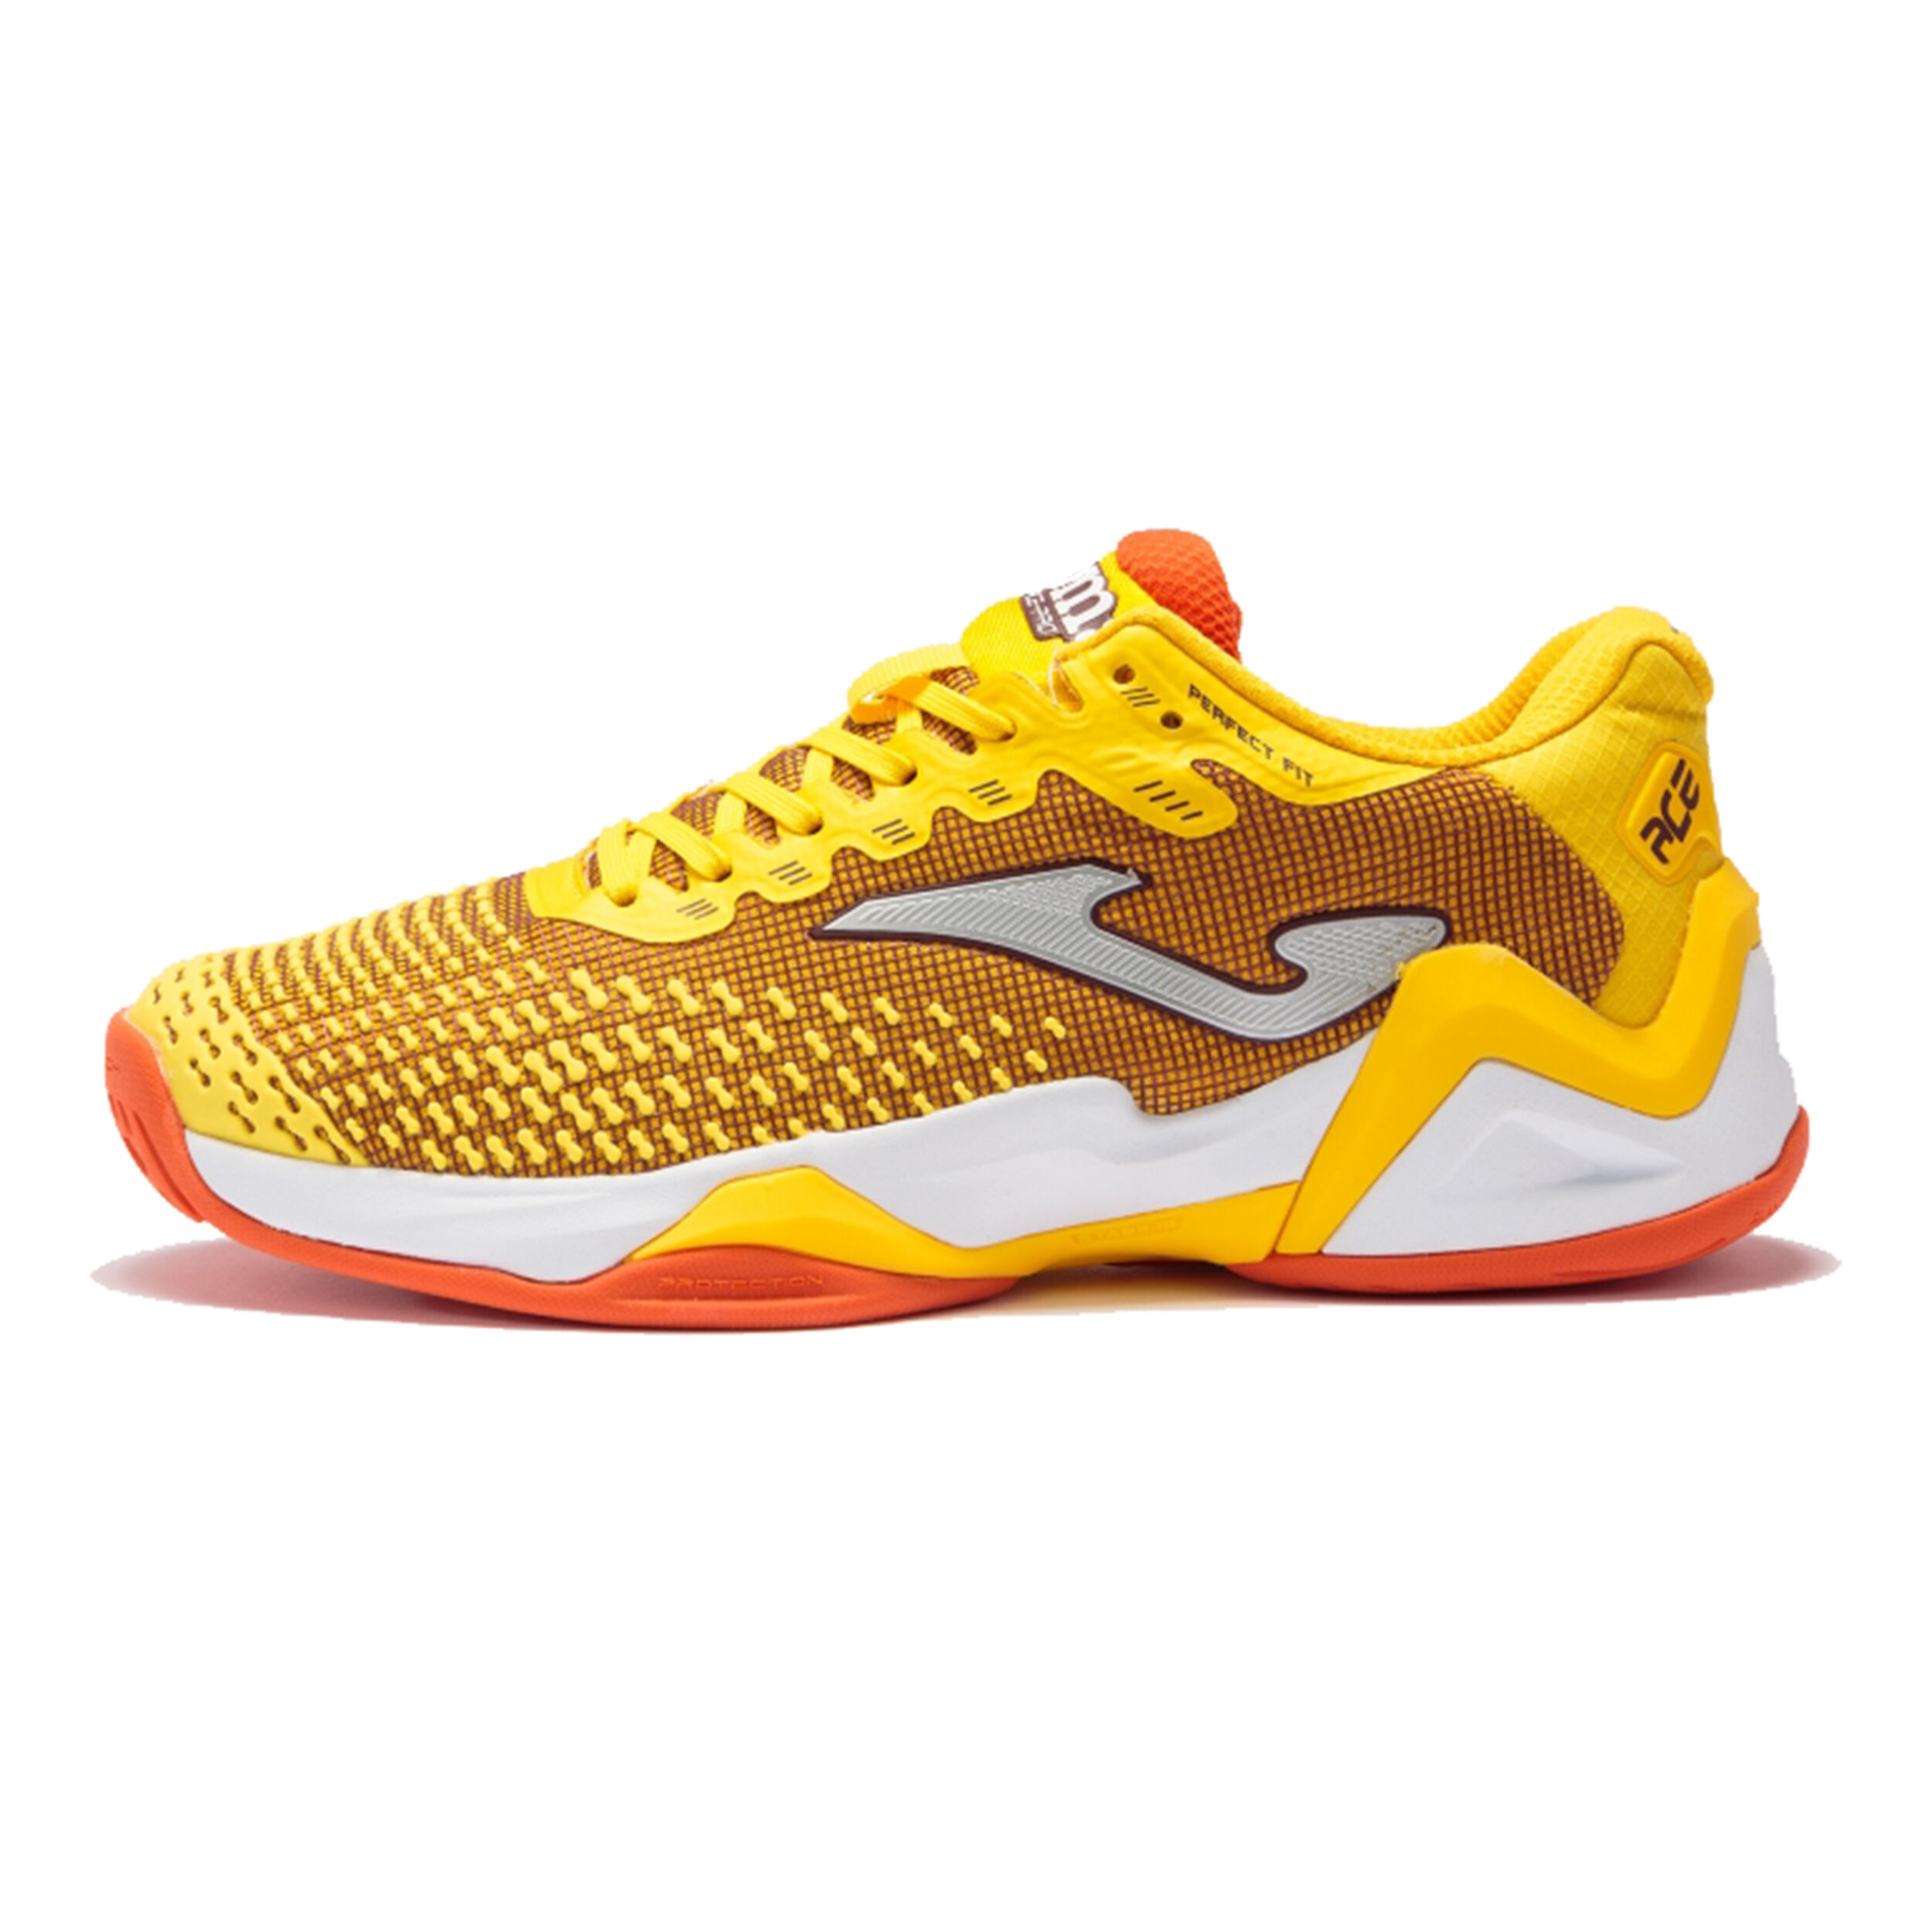 Ace Pro Clay Court Shoe Men - Golden Yellow, Orange